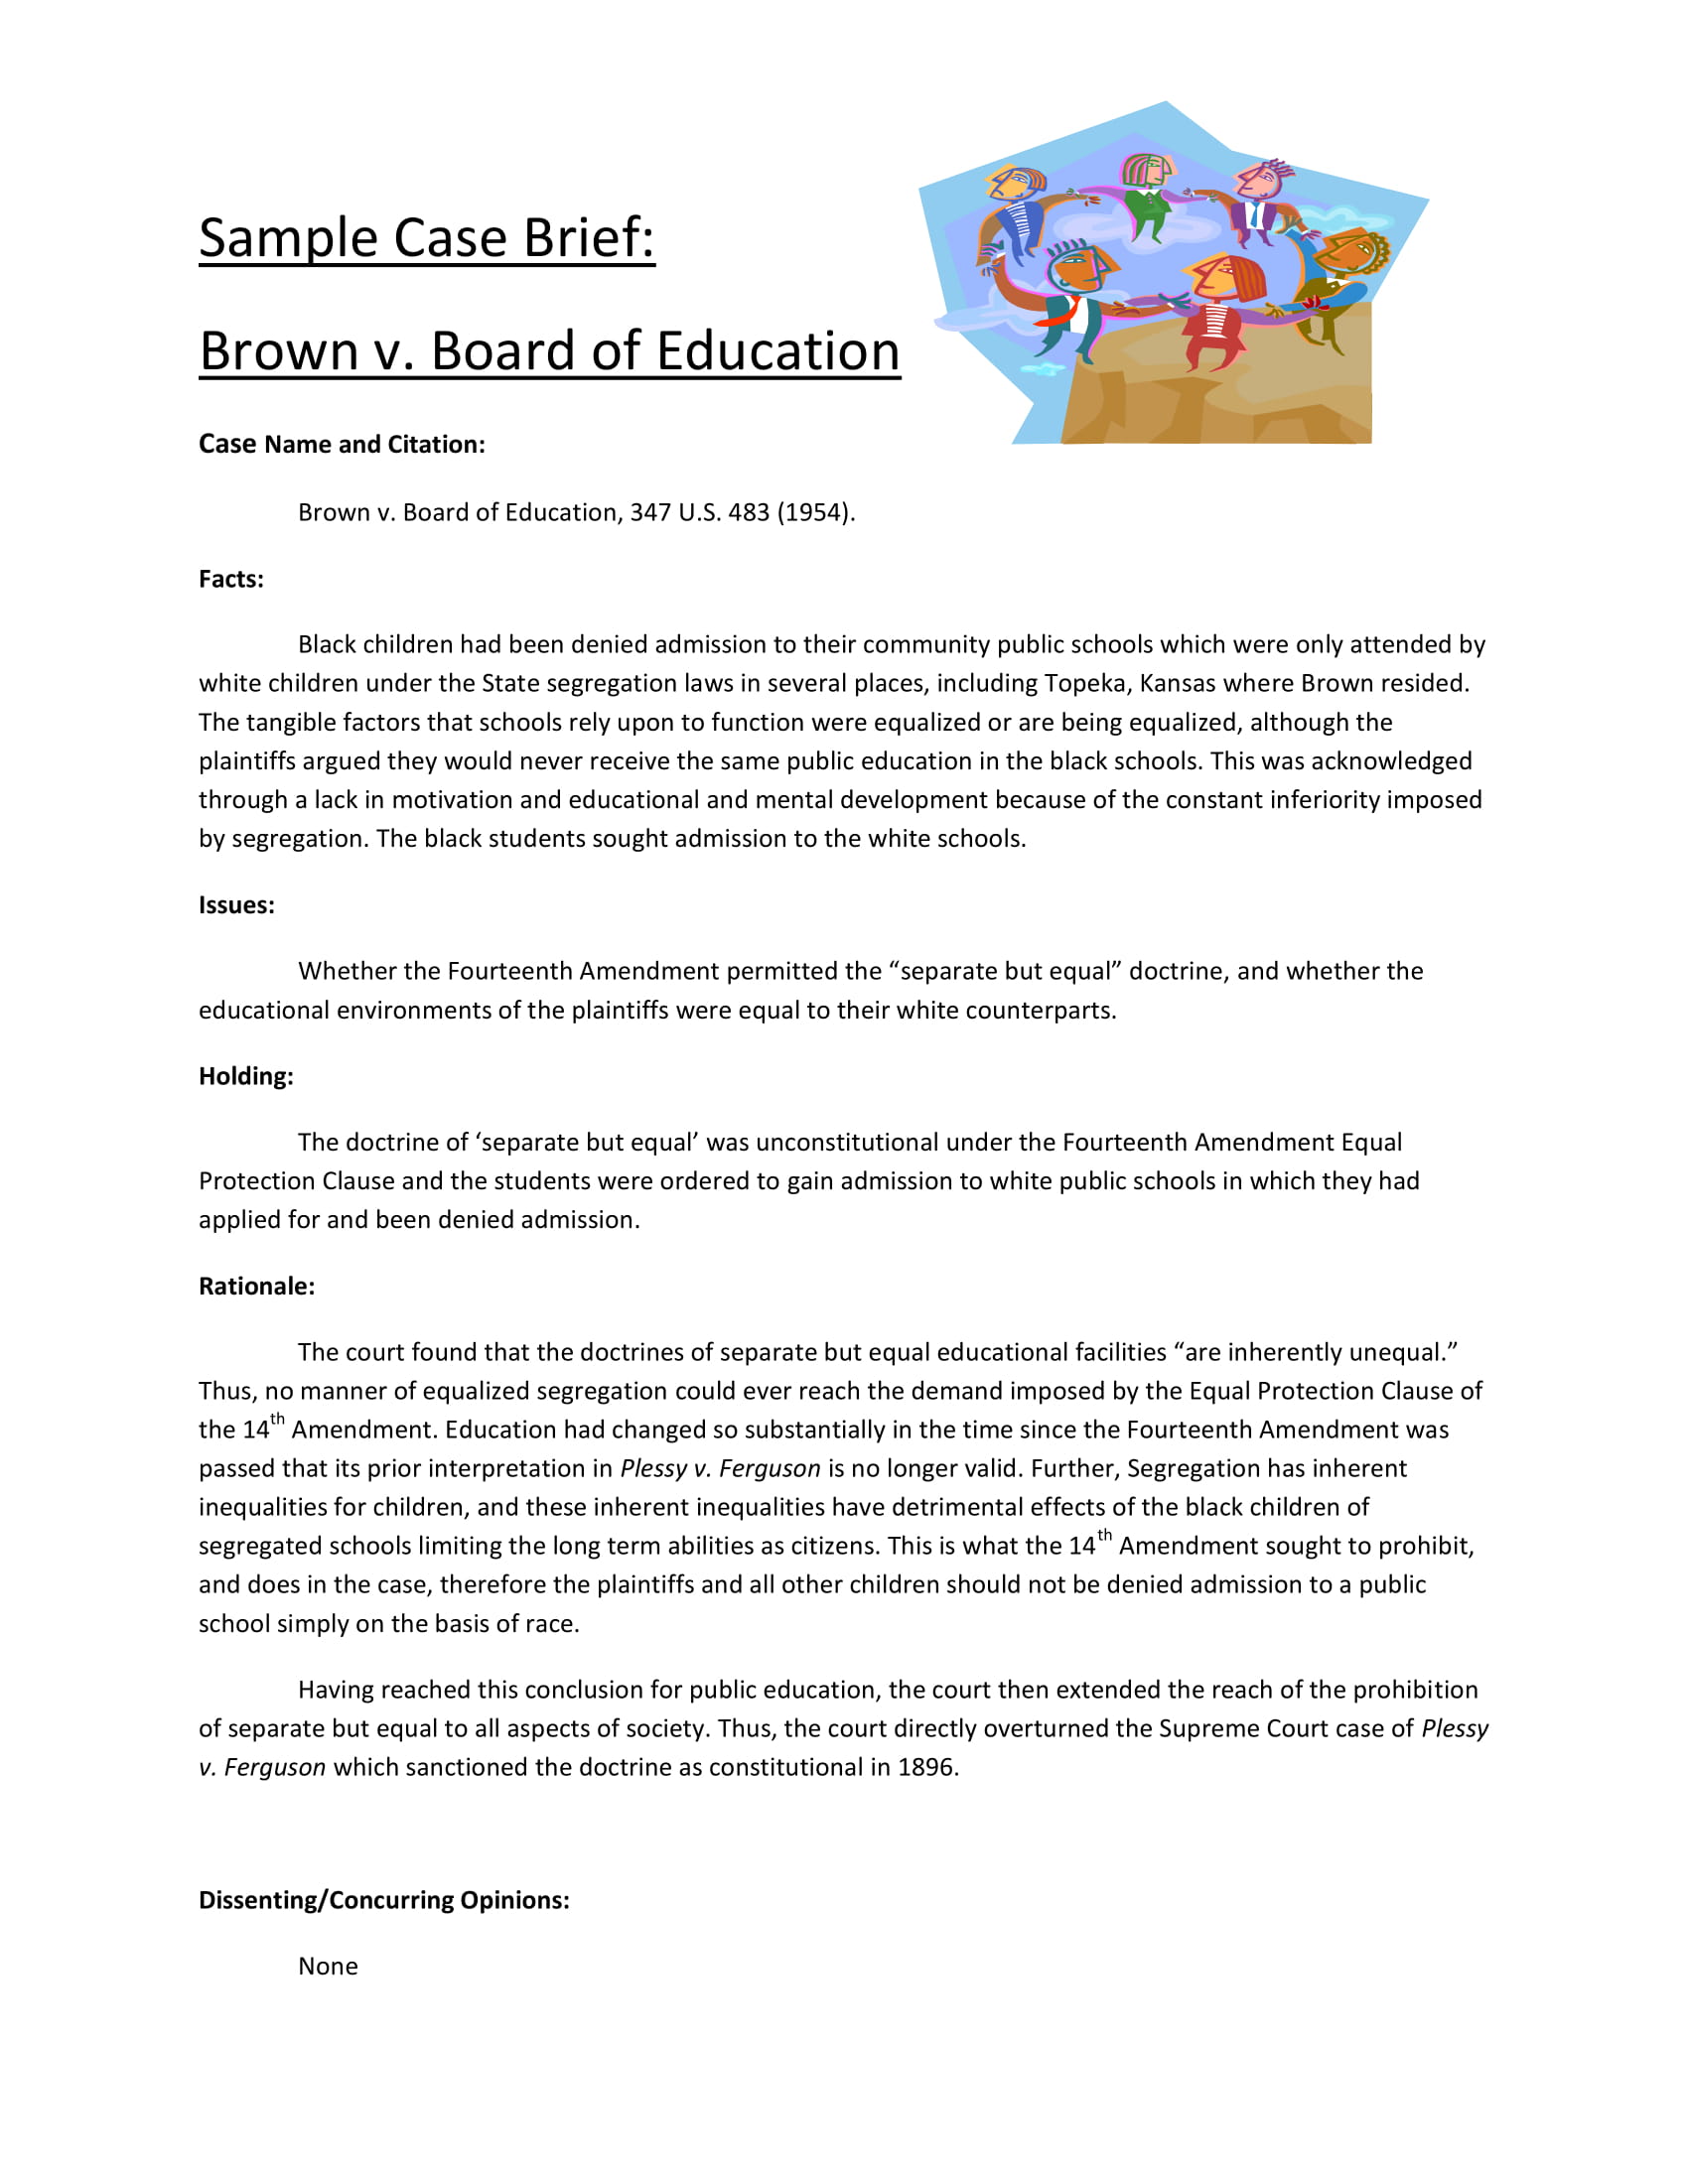 brown v board of education case brief